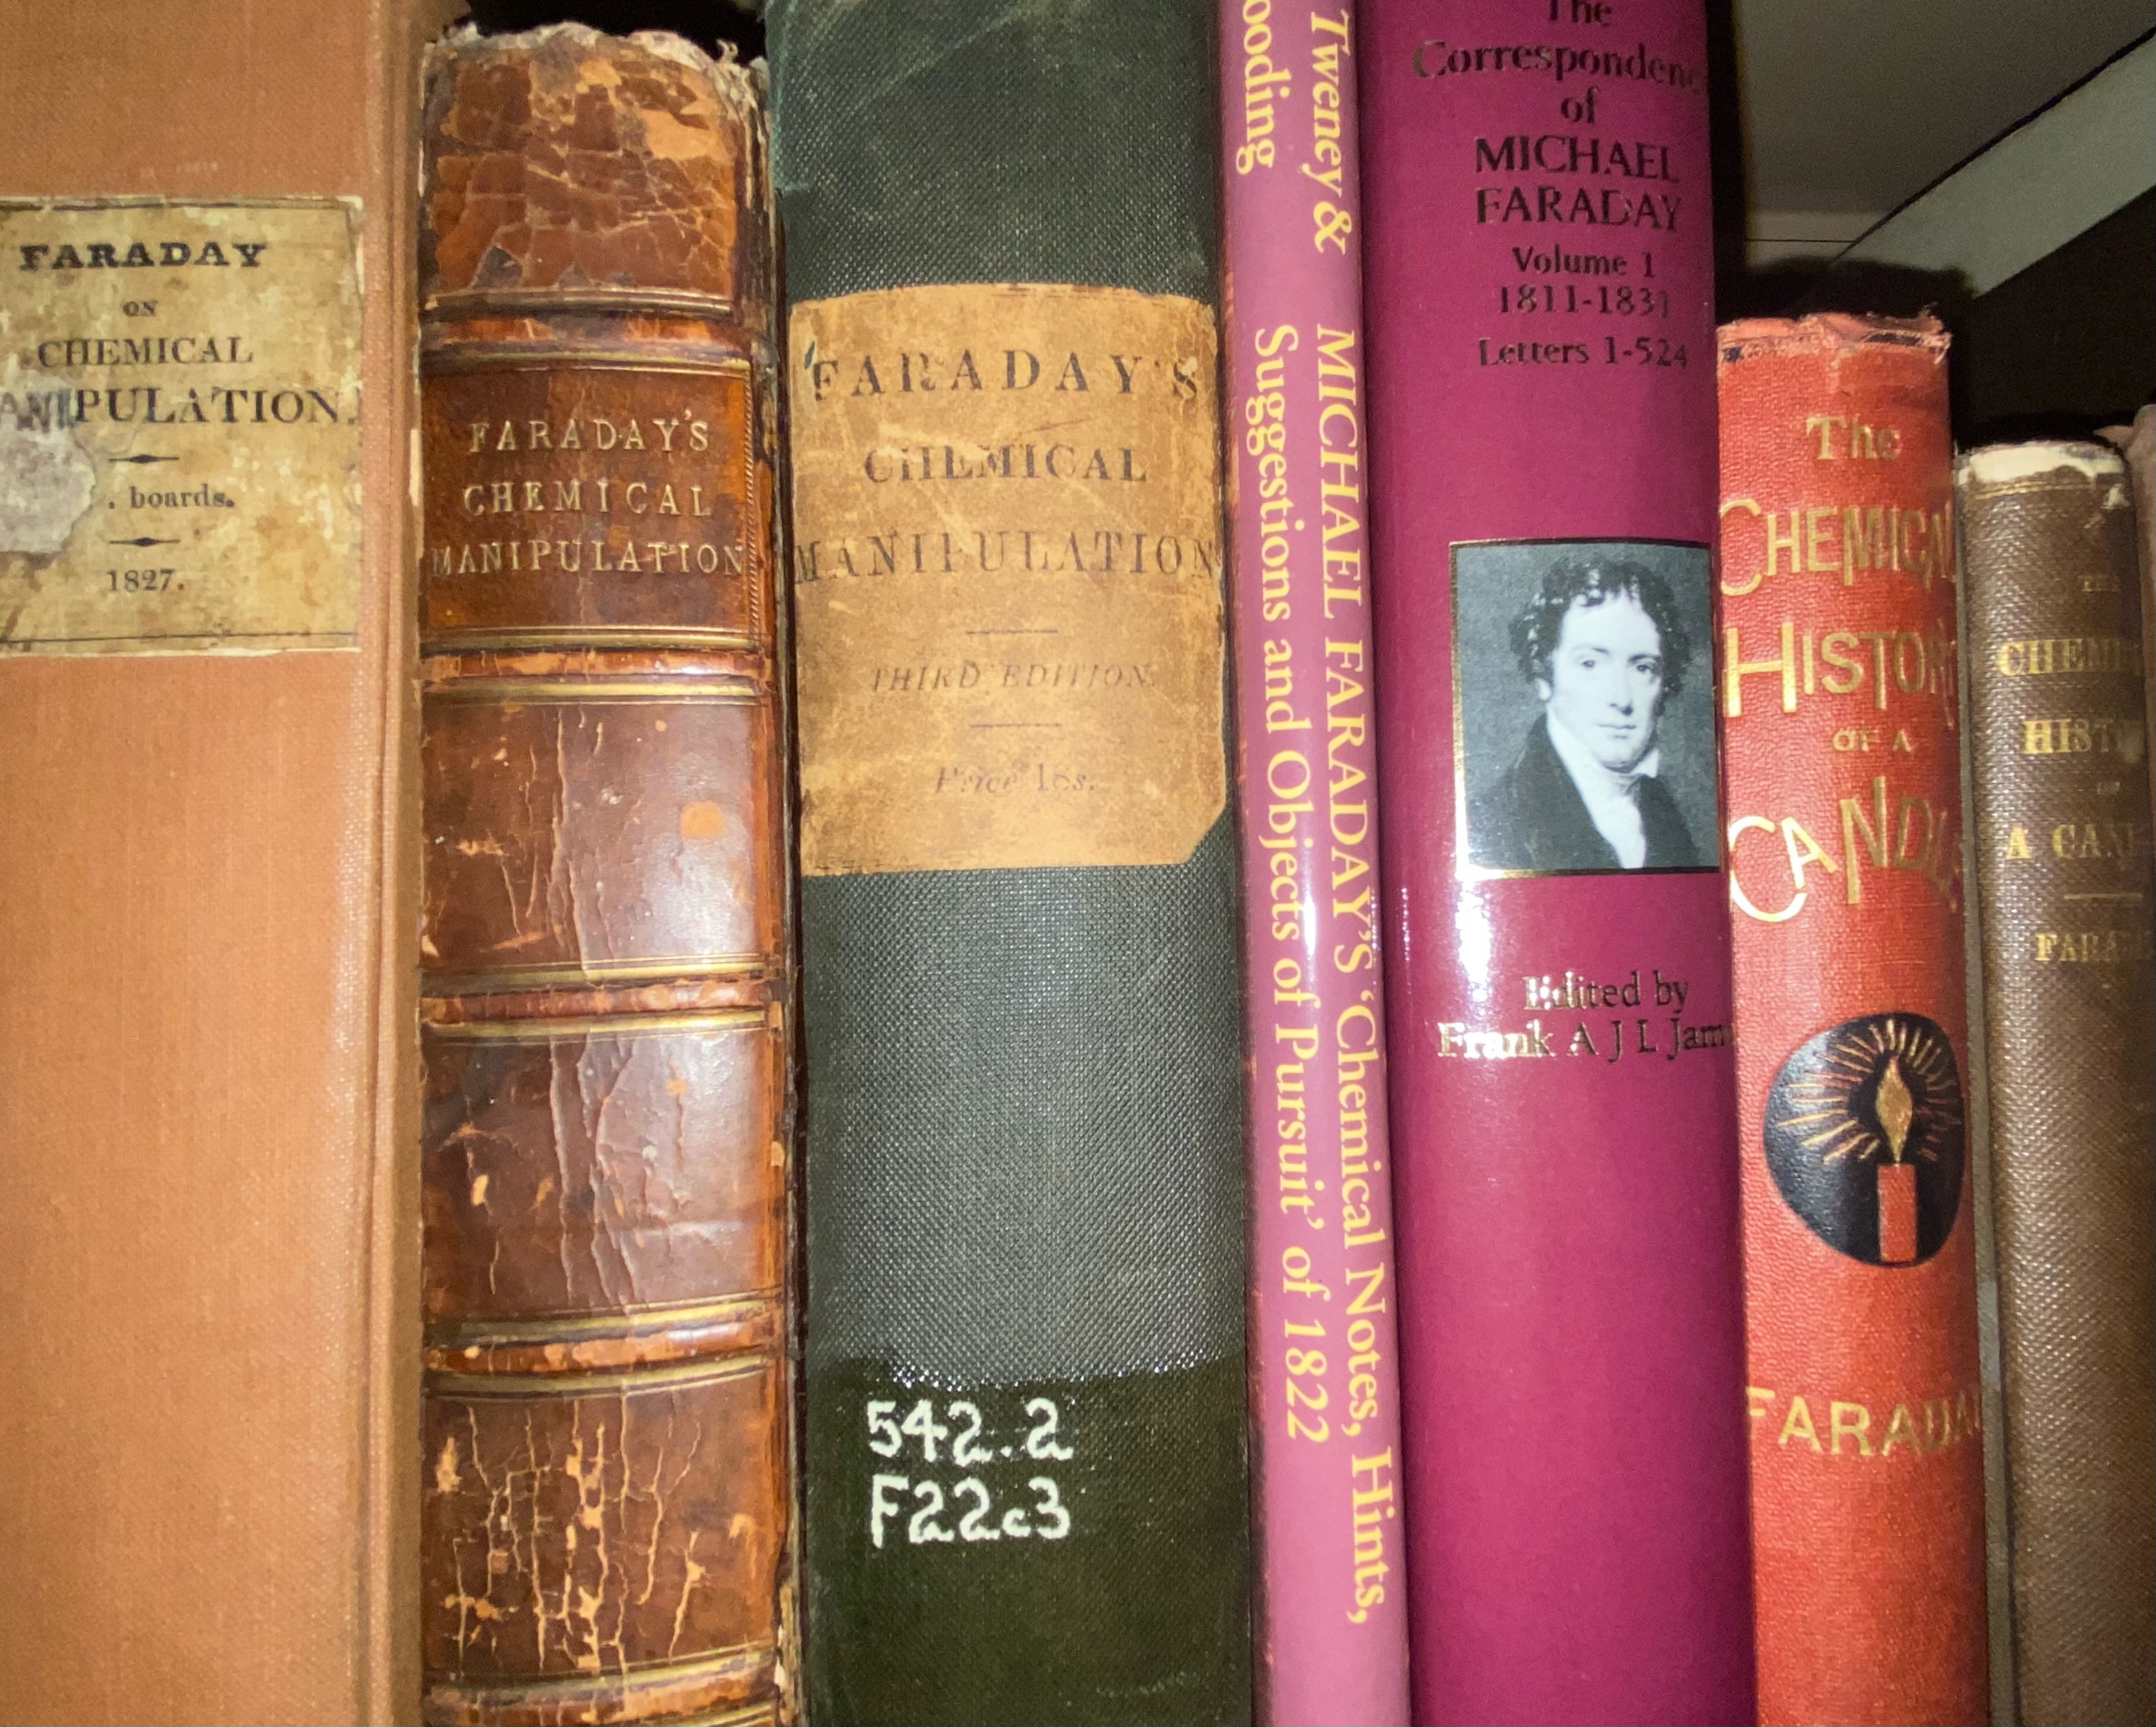 Photo of shelf of books (Faraday - rare books and more recent works)